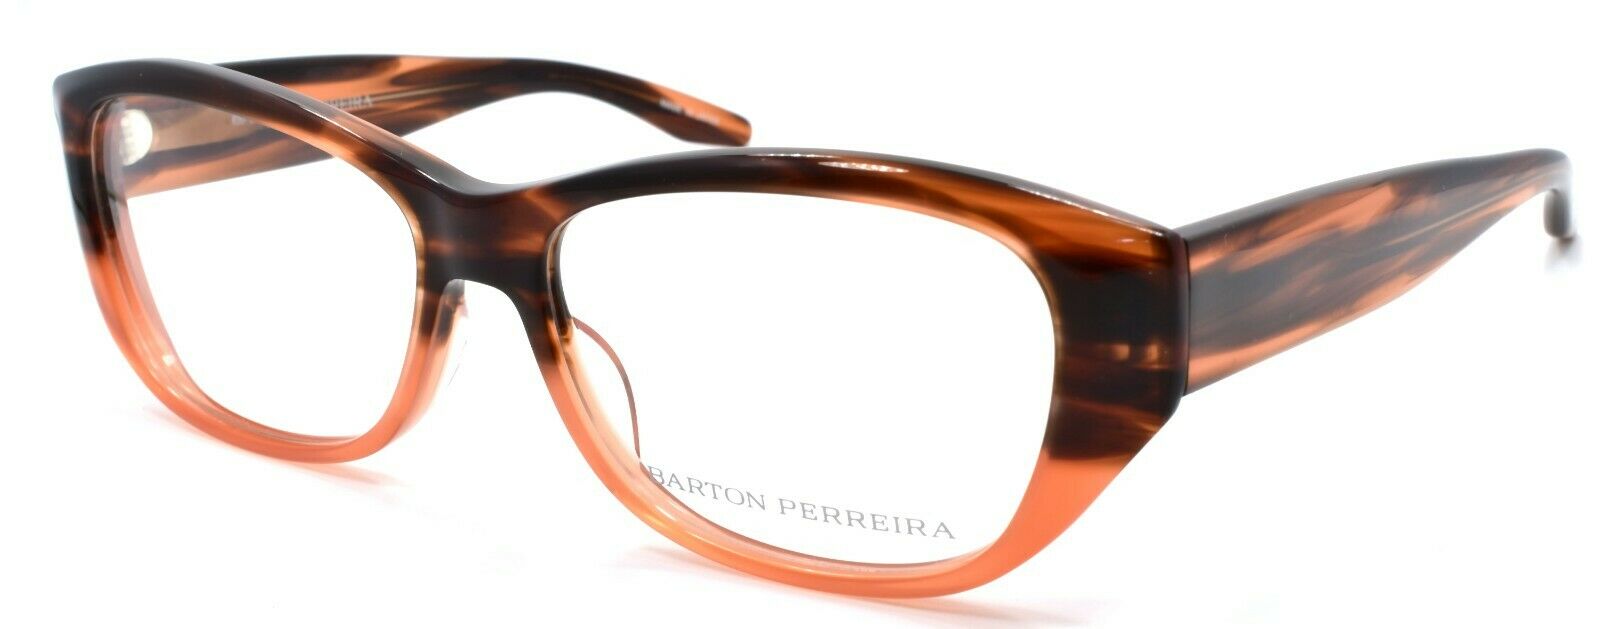 1-Barton Perreira Sexton ARG Women's Glasses Frames 54-15-138 Amber Rose Gradient-672263039389-IKSpecs